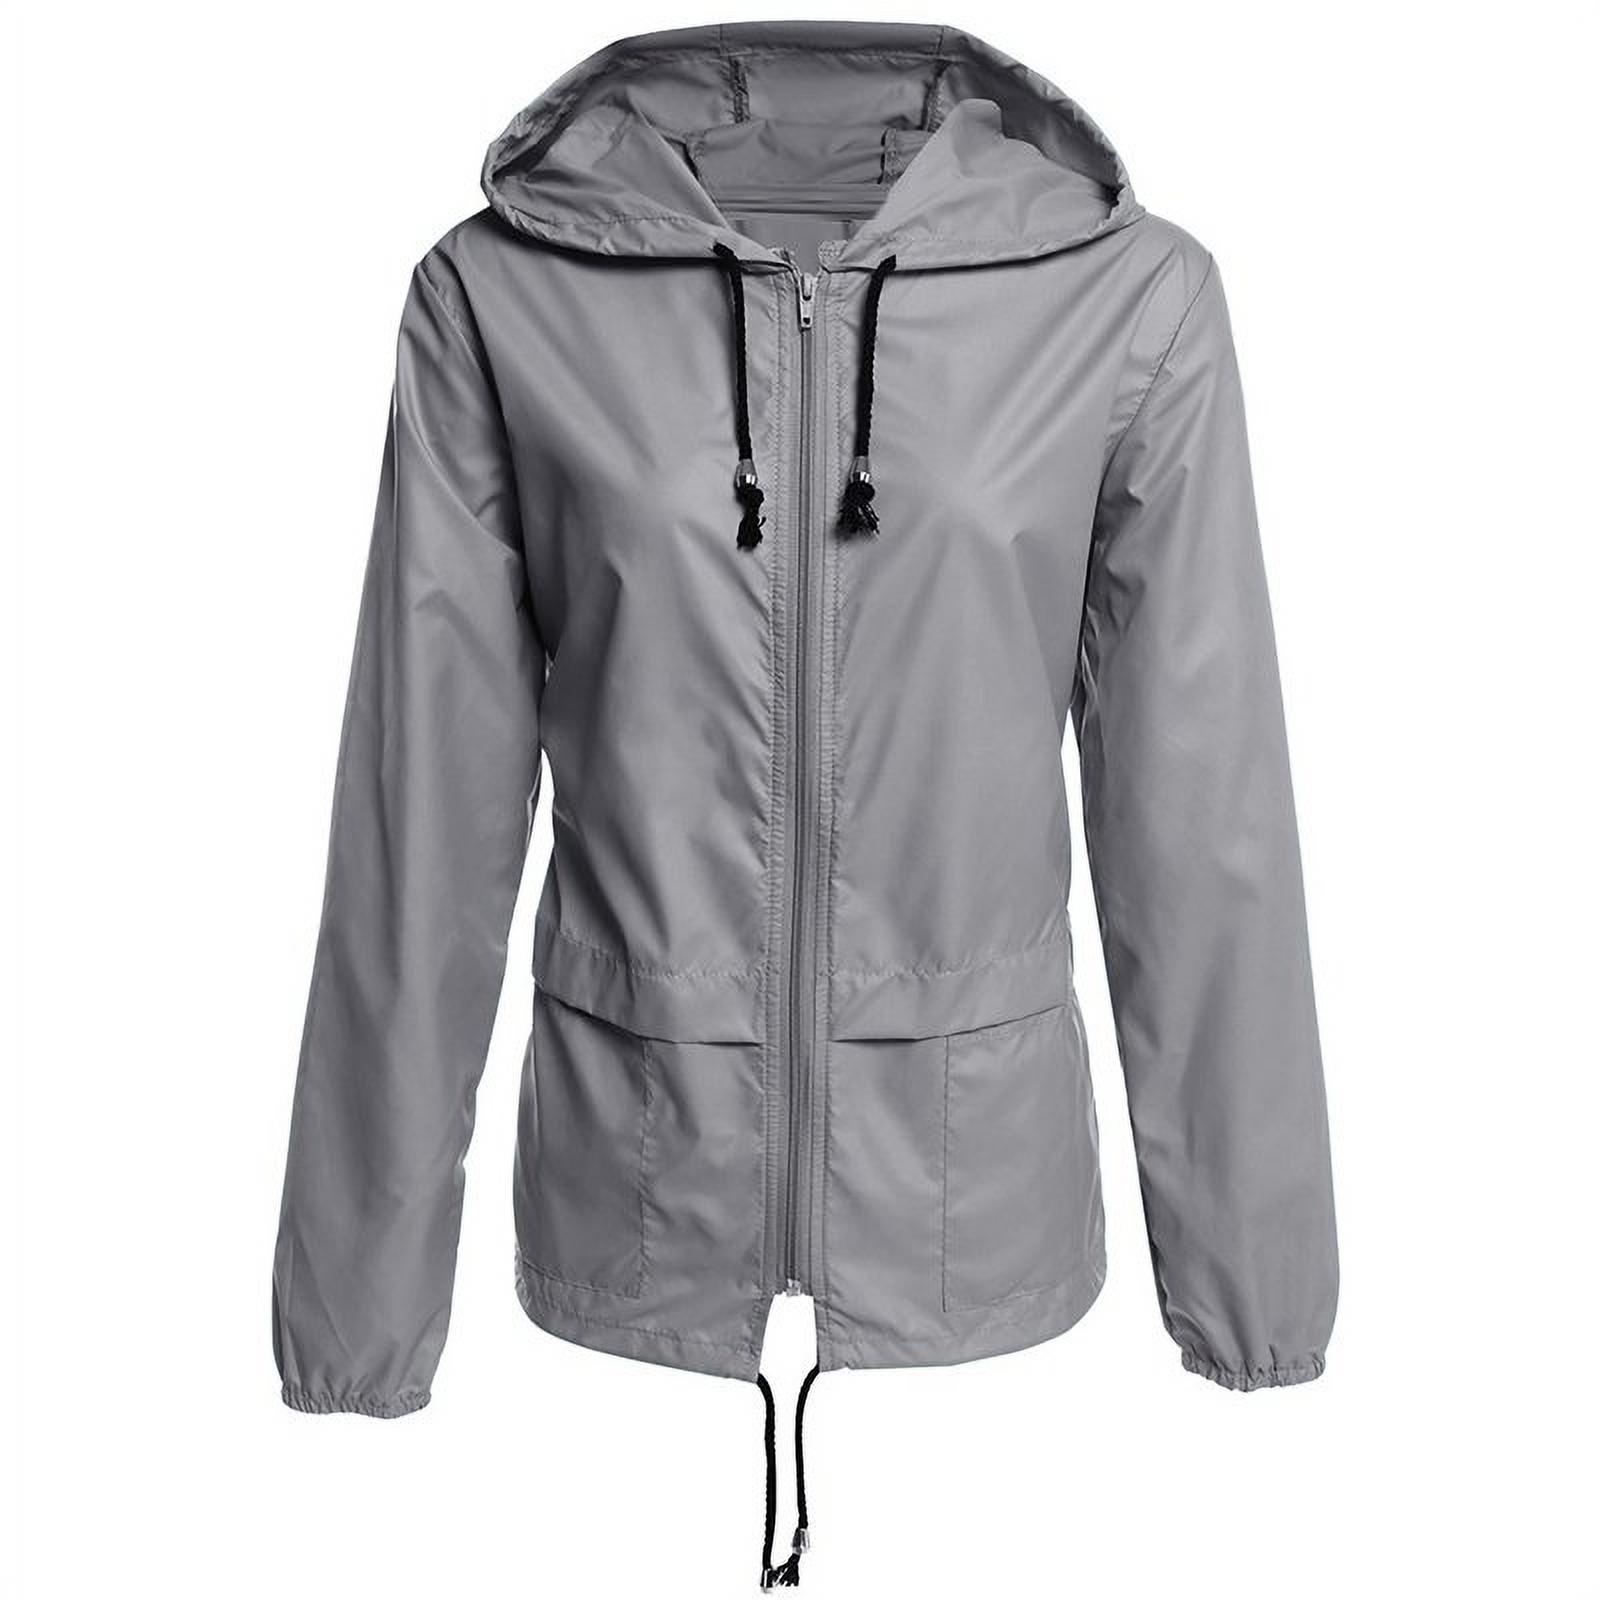 Fashion Thin Section Ladies Waterproof Clothing Hooded Drawstring Outdoor Hiking Rain Jacket Jacket - image 1 of 7